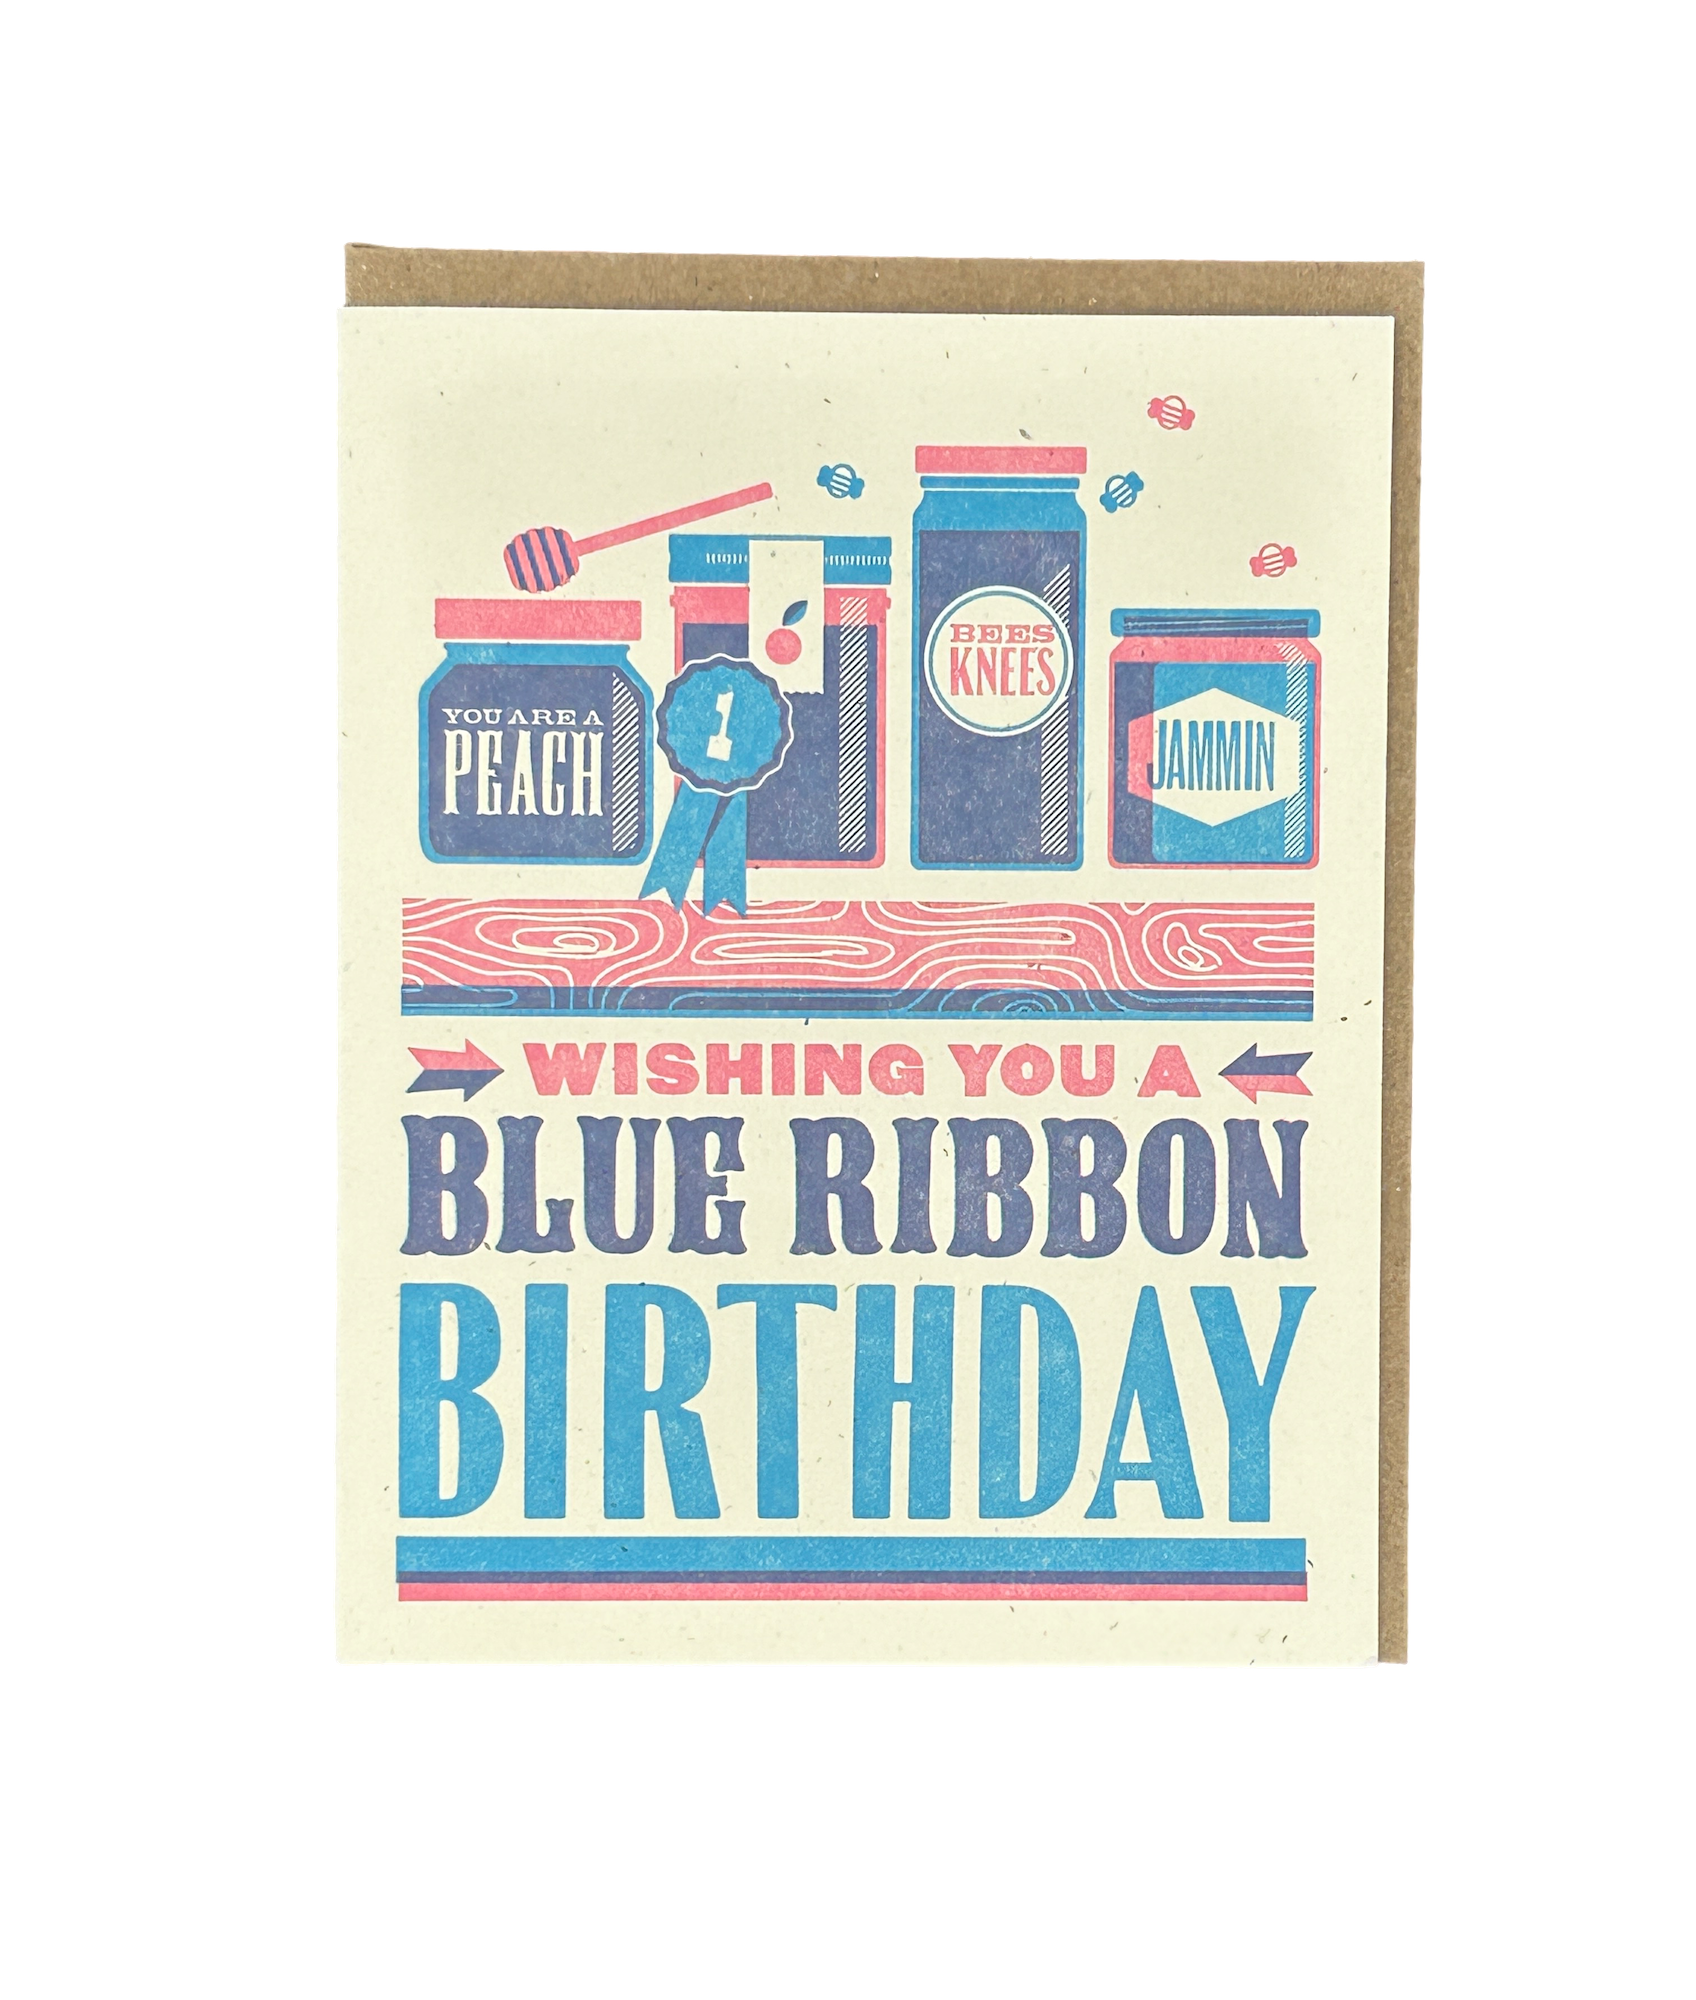 Blue Ribbon Birthday Letterpress Card